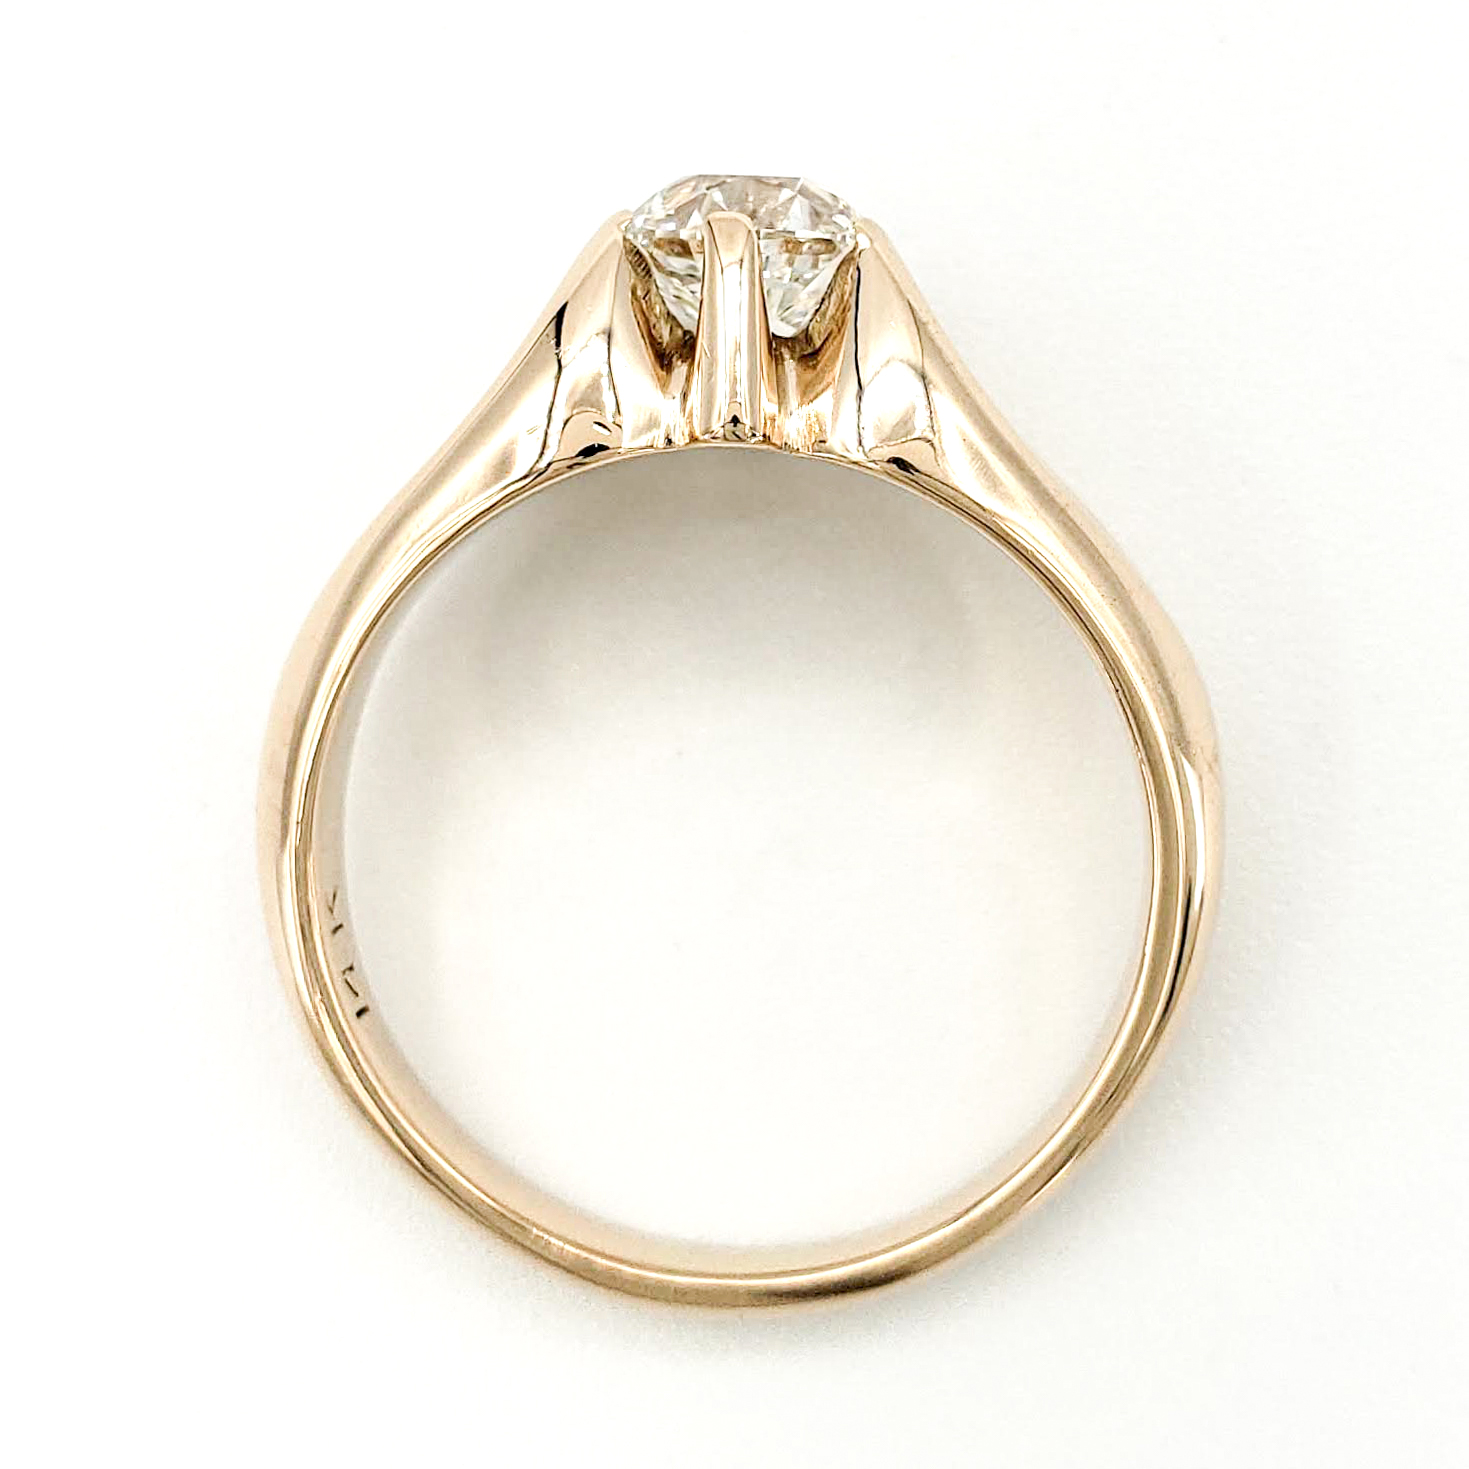 vintage-14-karat-gold-engagement-ring-with-1-13-carat-old-mine-cut-diamond-egl-g-si2